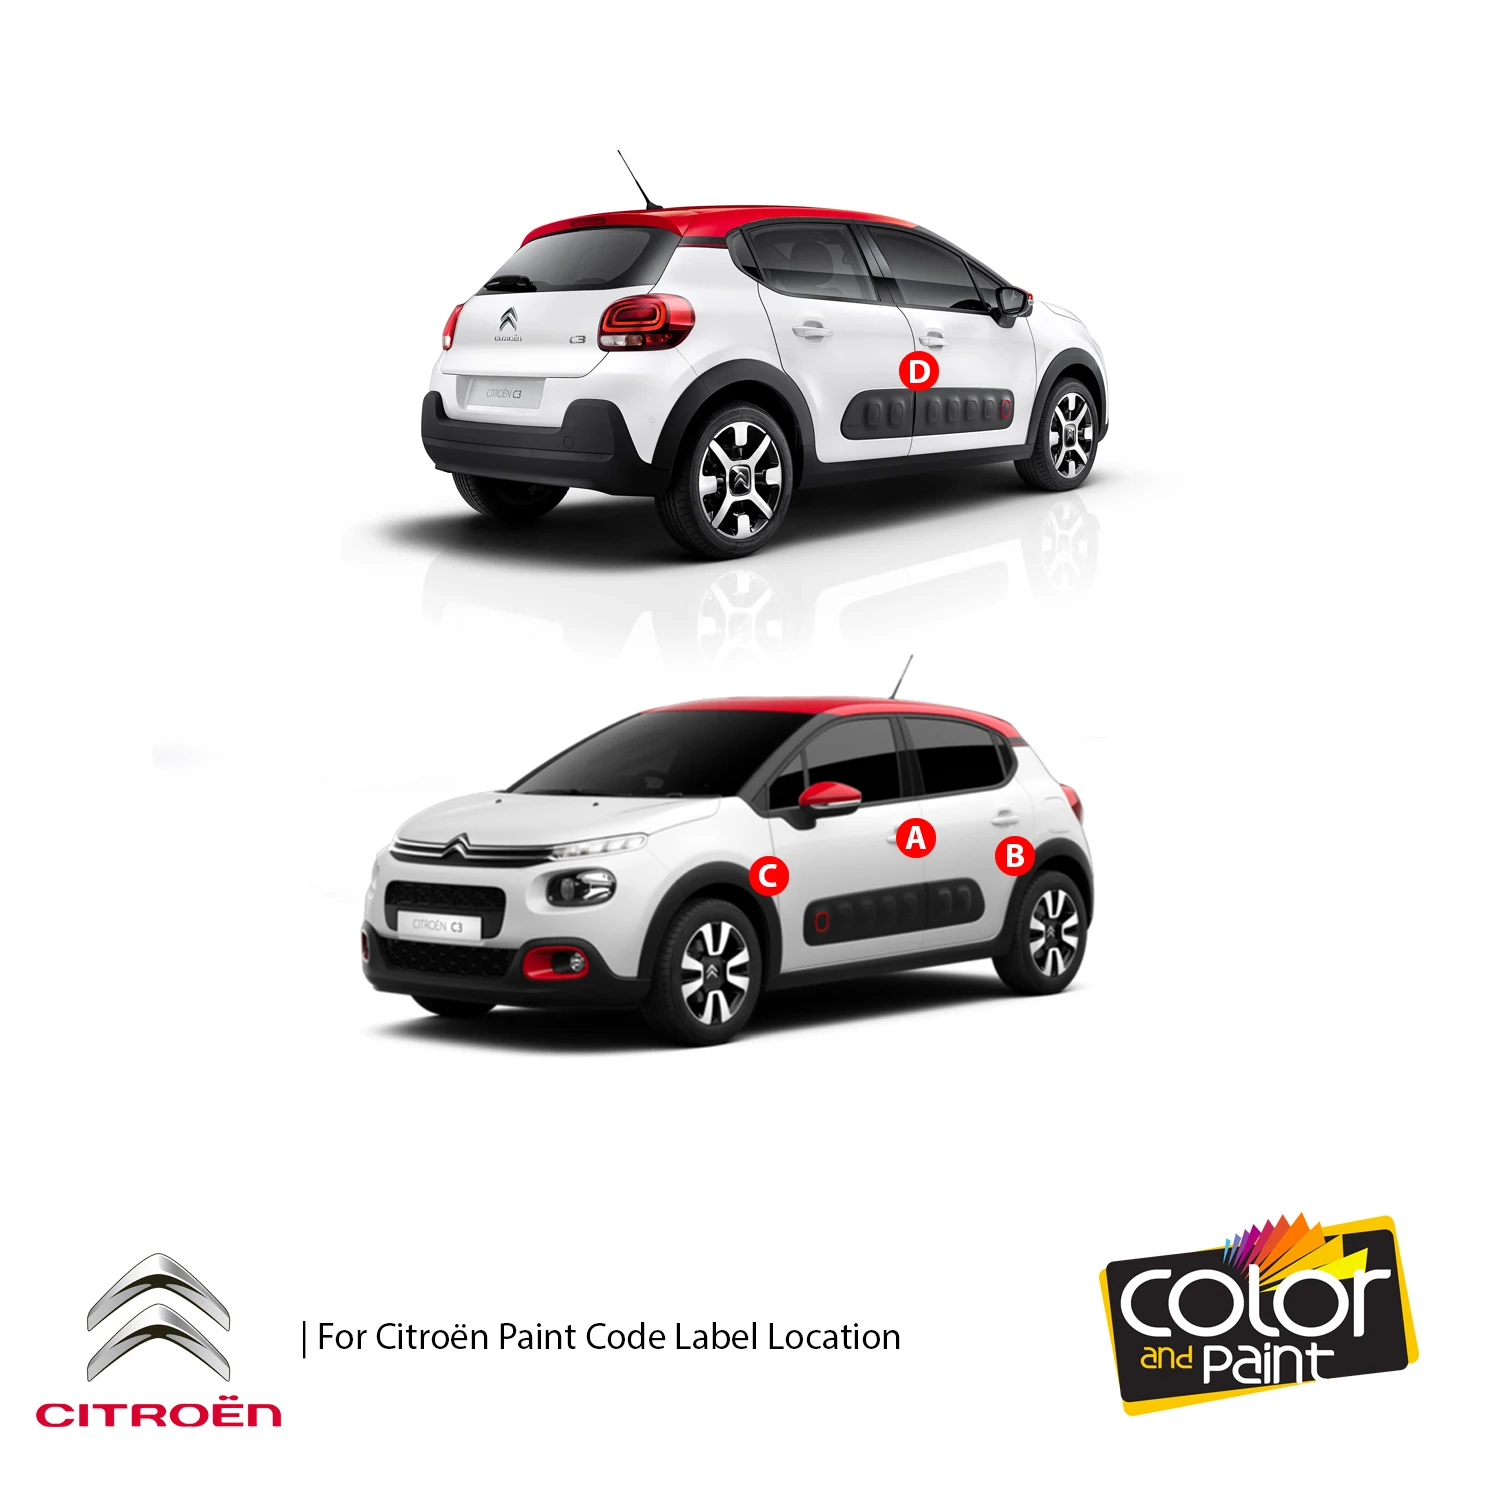 

Color and Paint for Citroen Automotive Touch Up Paint - JAUNE MALAGA - KAE - Paint Scratch Repair, exact Match